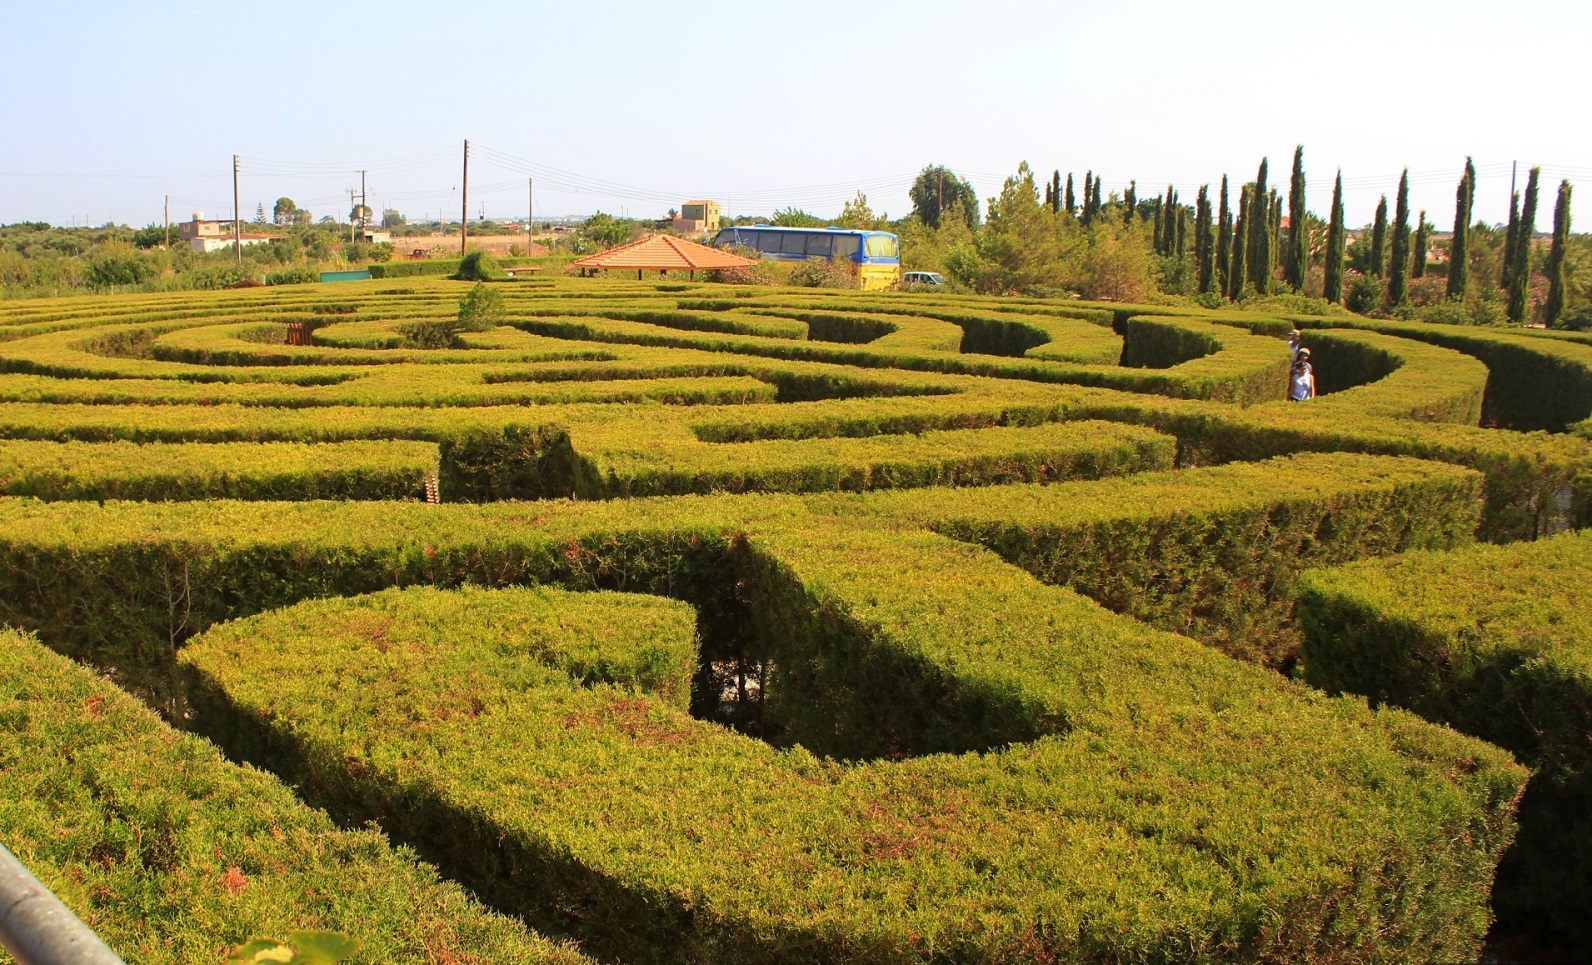 Hedge maze in Cyherbia